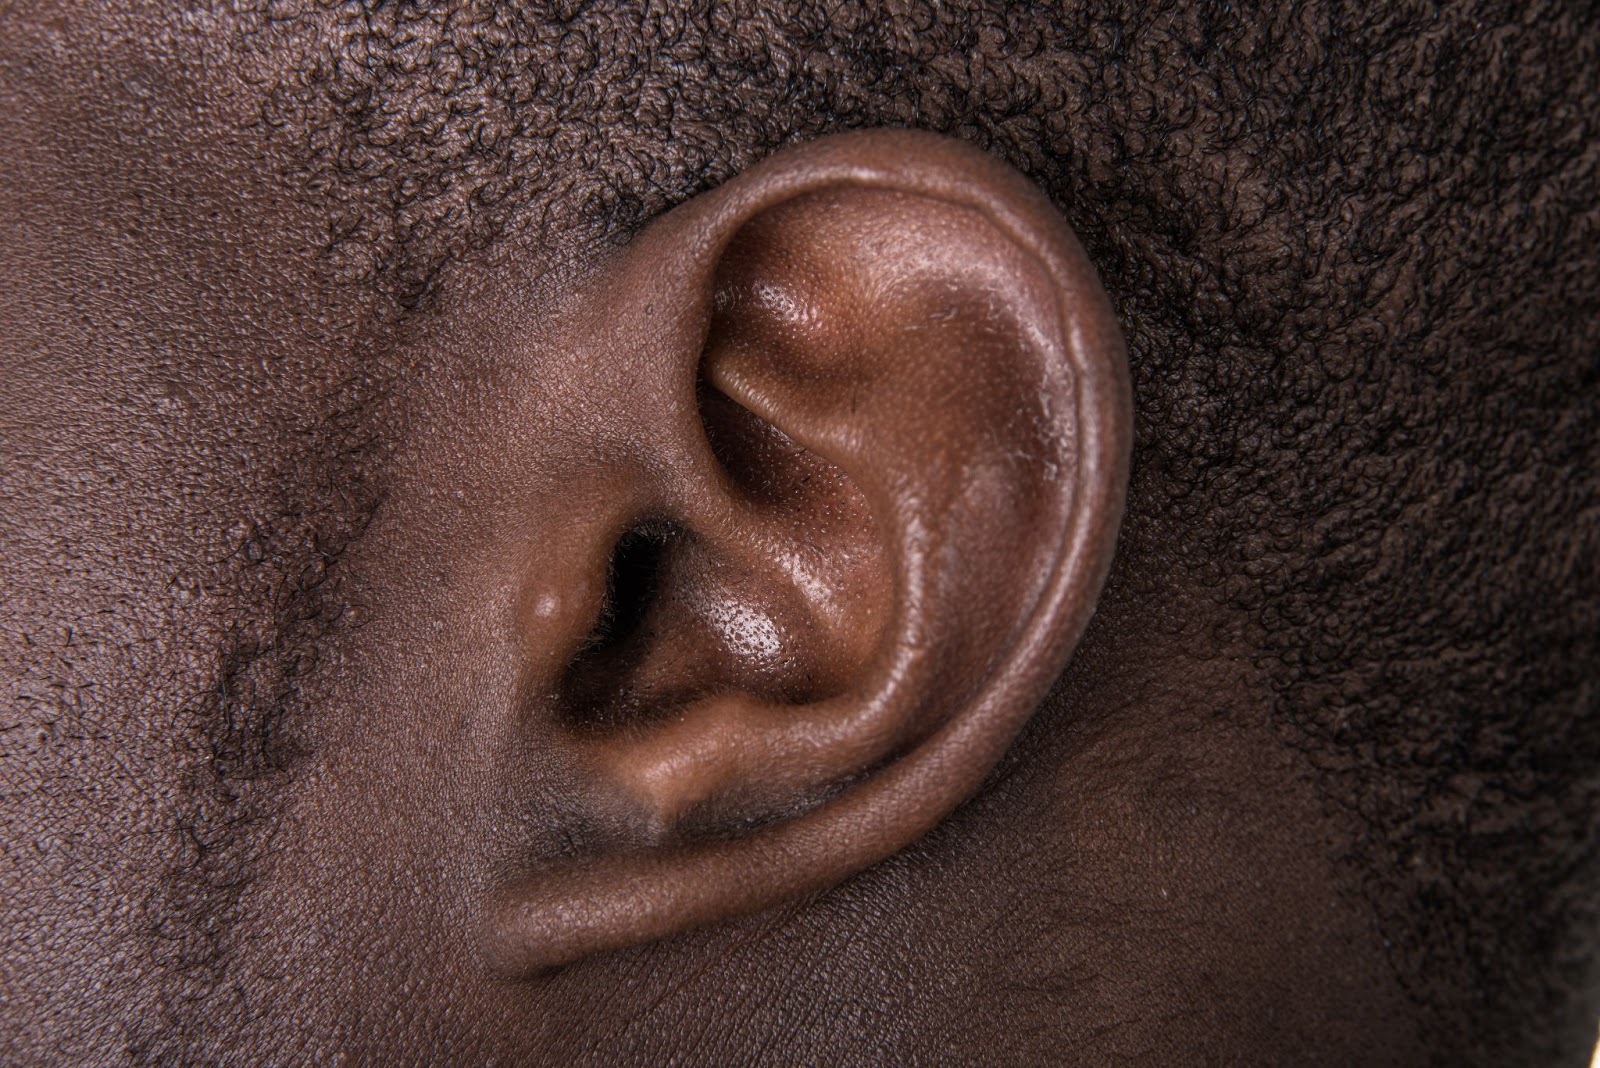 Ear congestion: A closeup of an ear